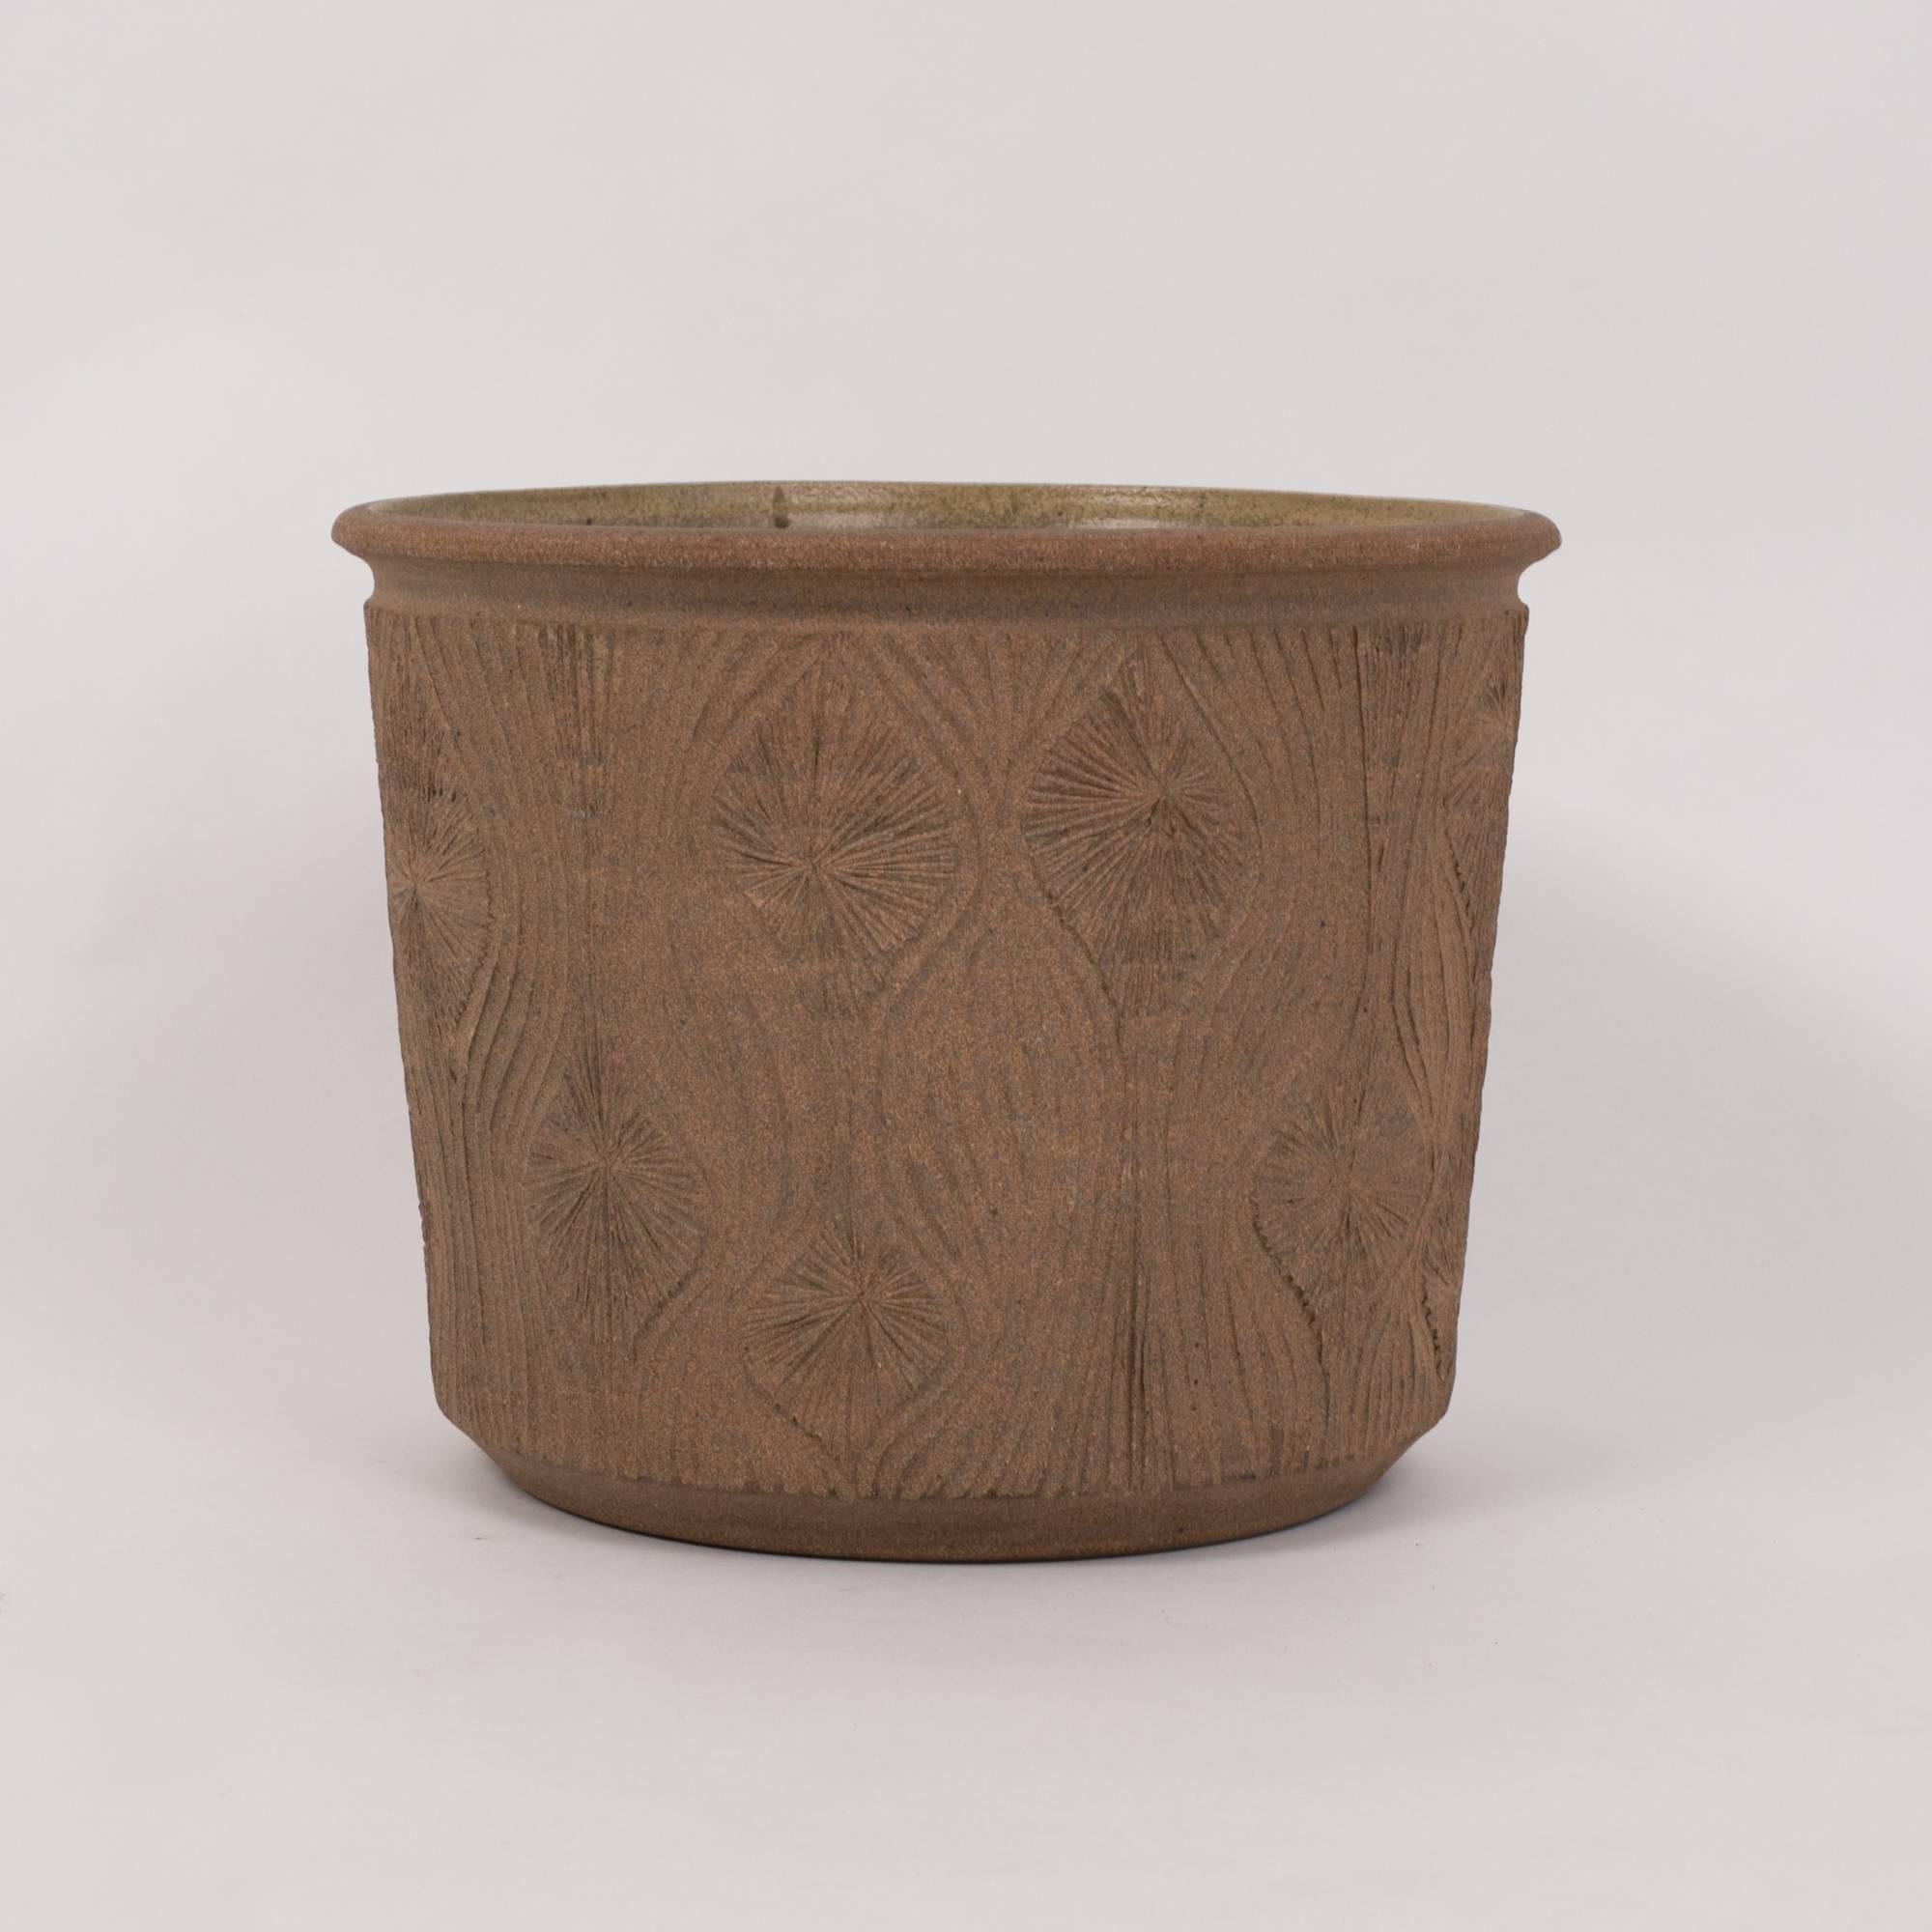 American Robert Maxwell Studio Pottery Planter with Incised “Teardrop Sunburst” Detail